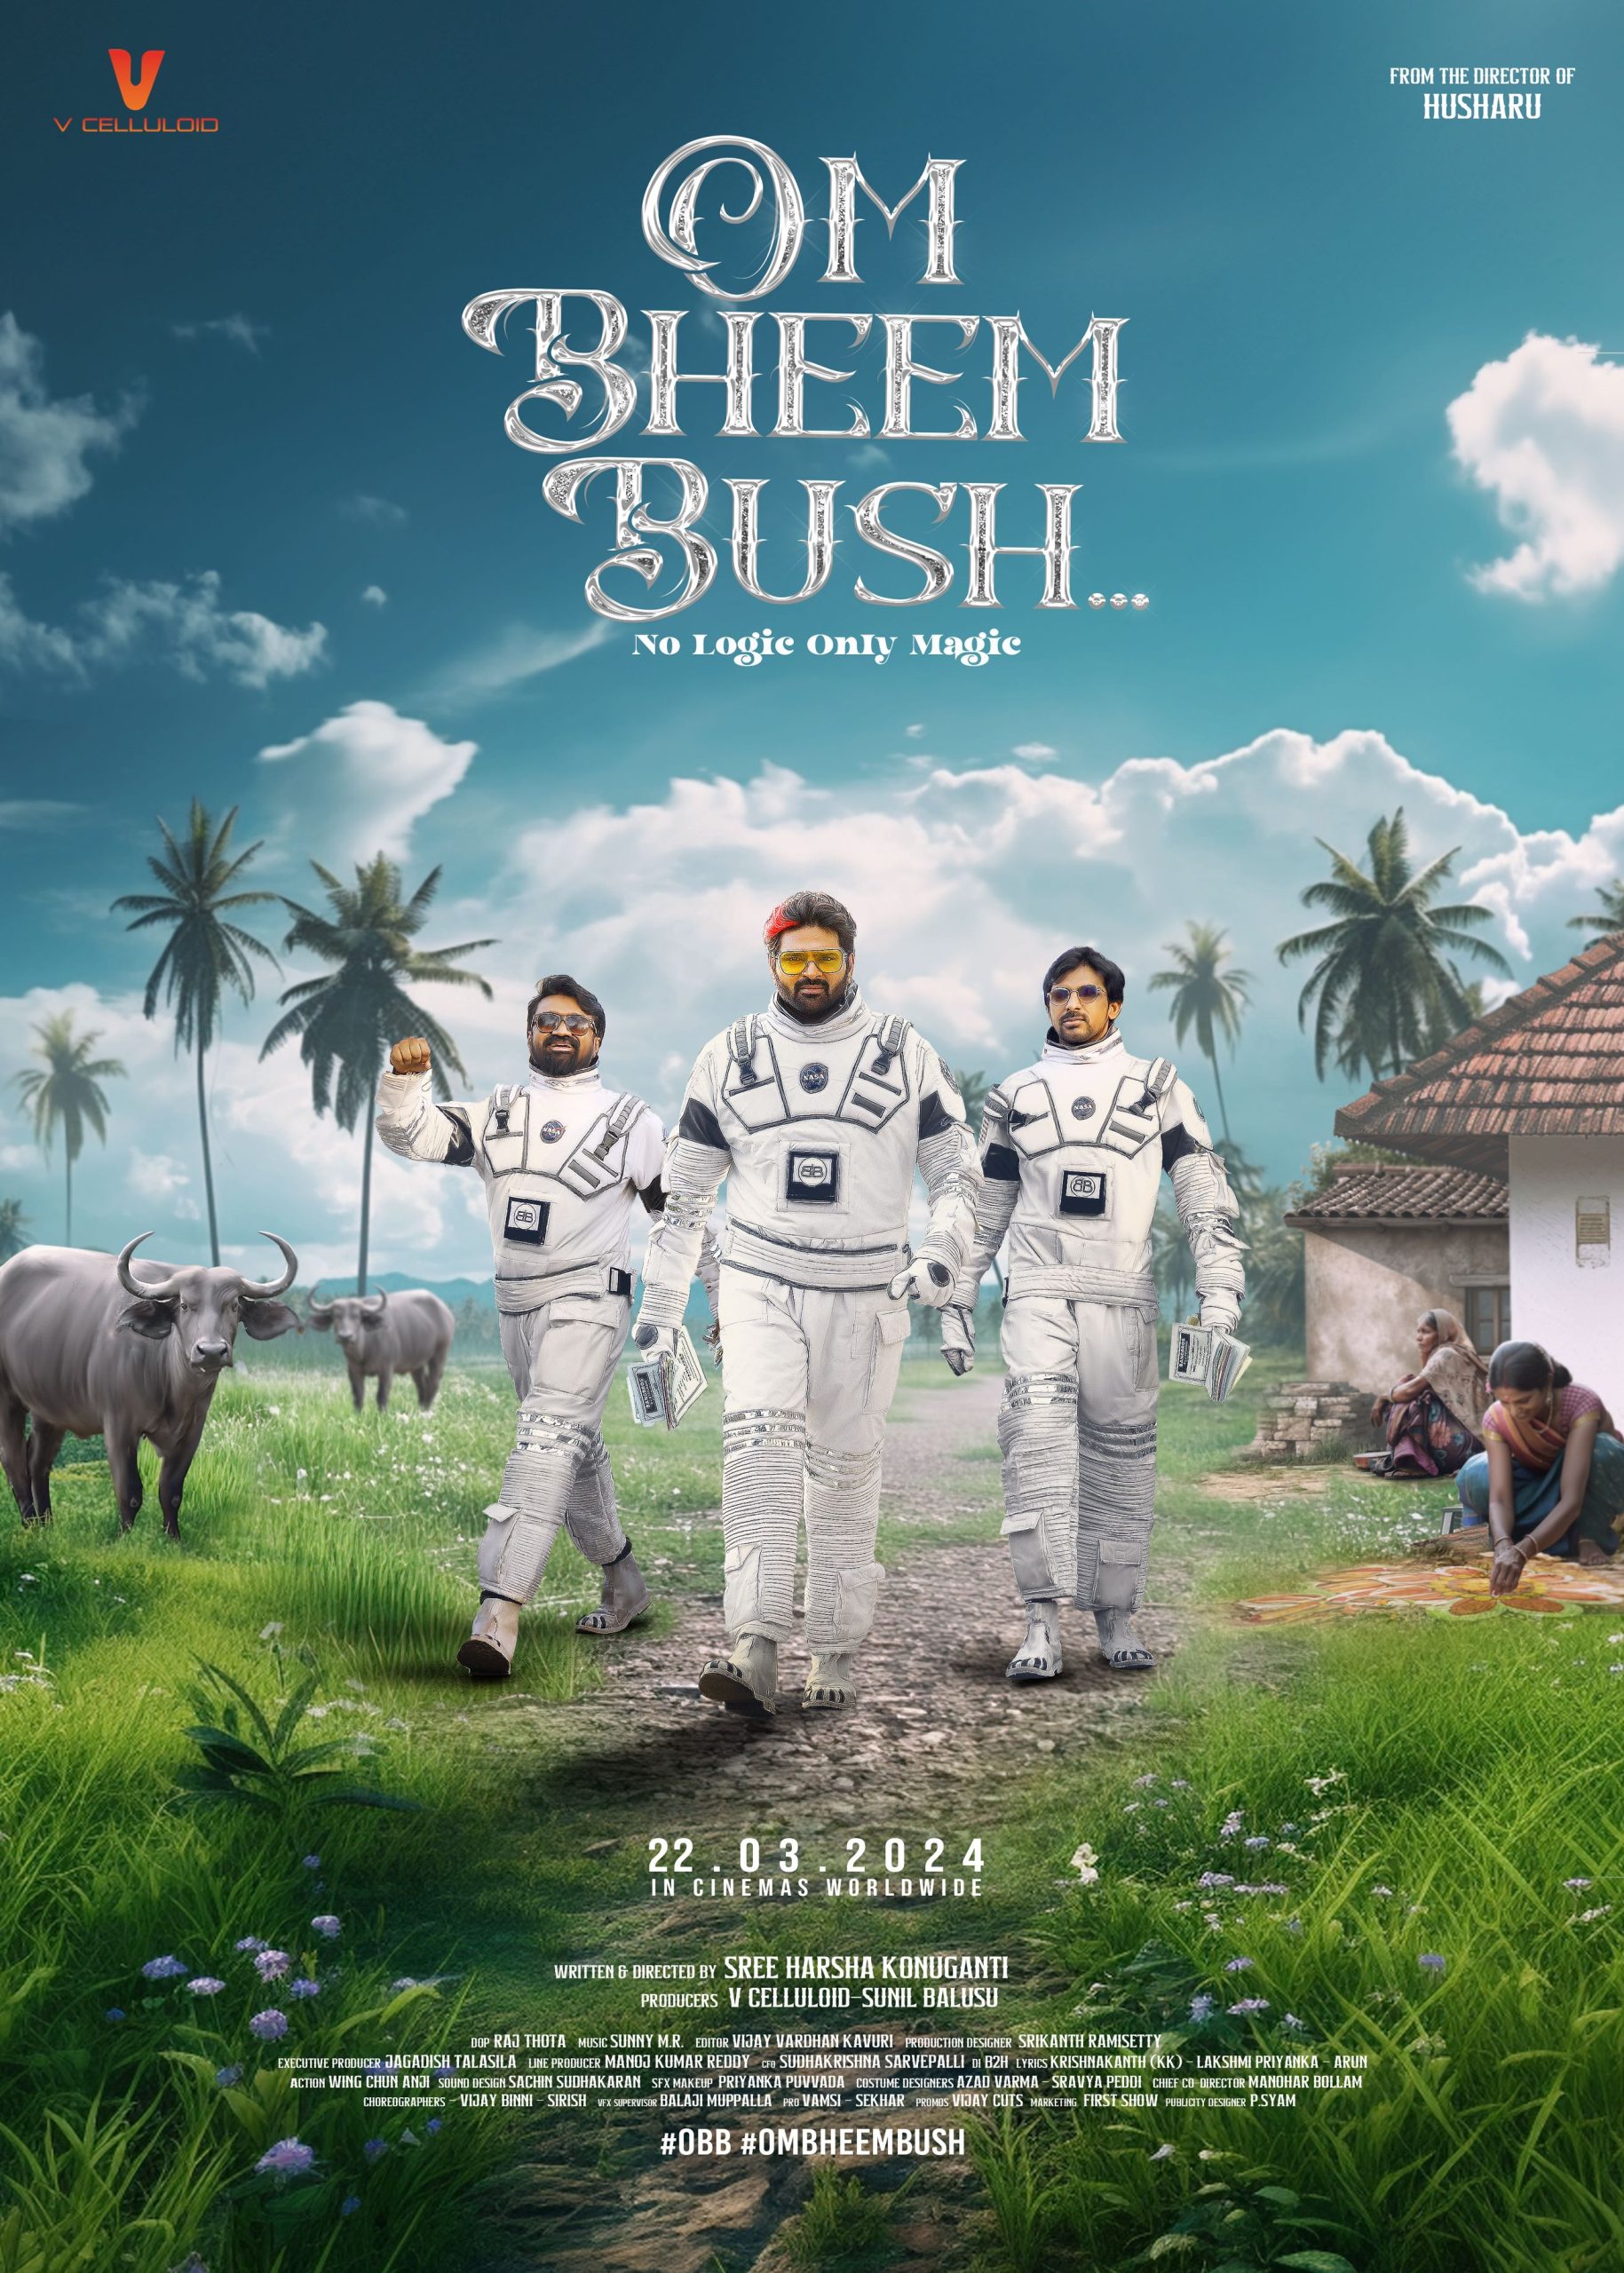 Om Bheem Bush Movie First Look Released